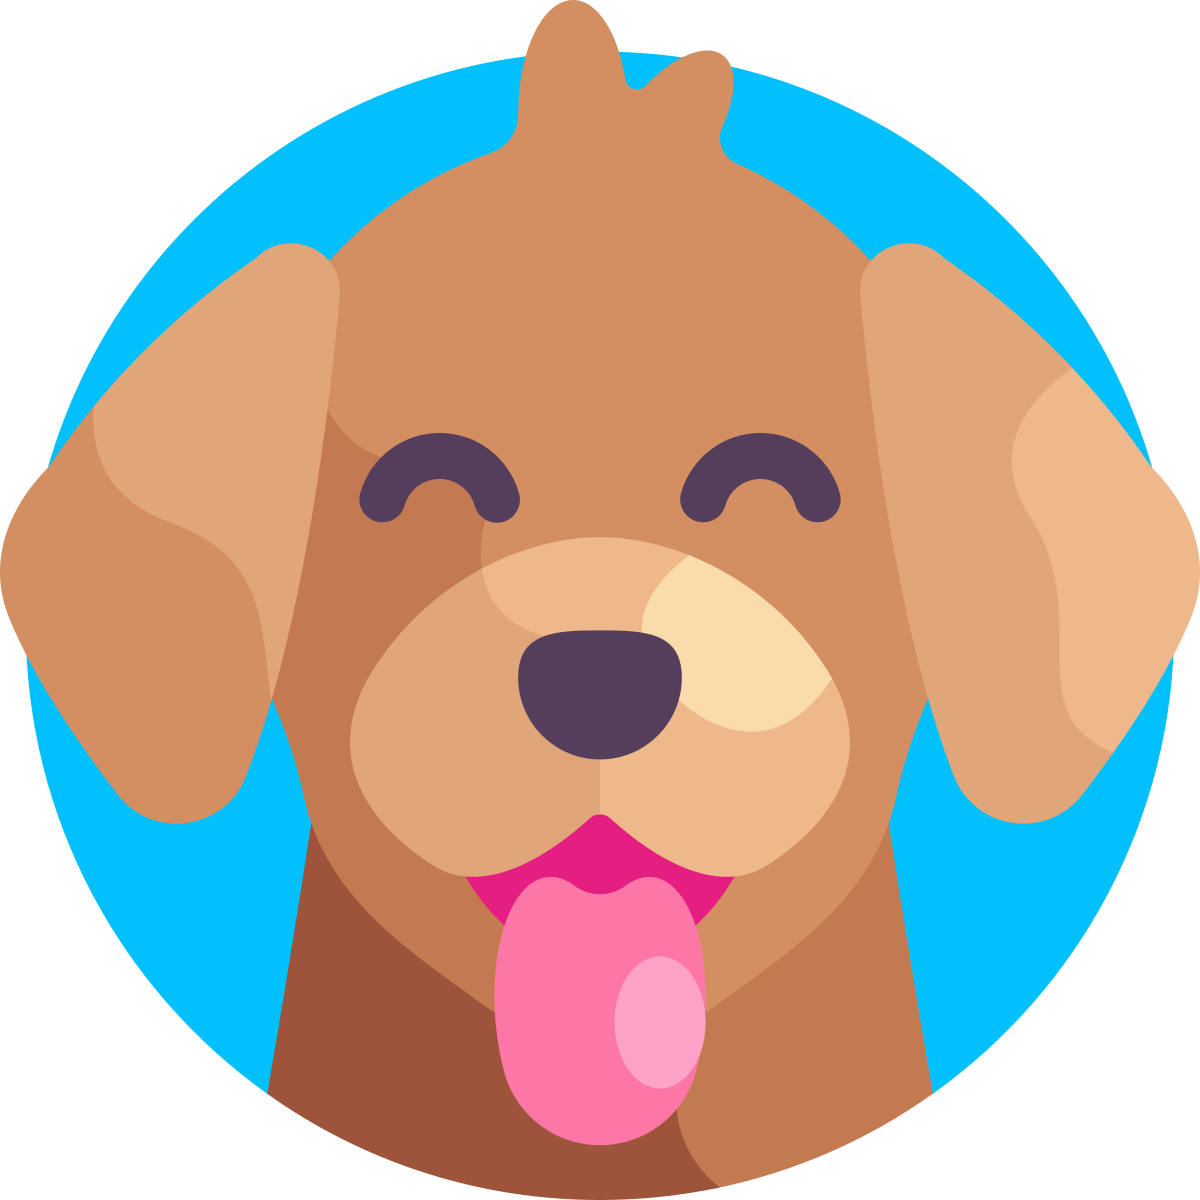 The Chinese horoscope for Dog